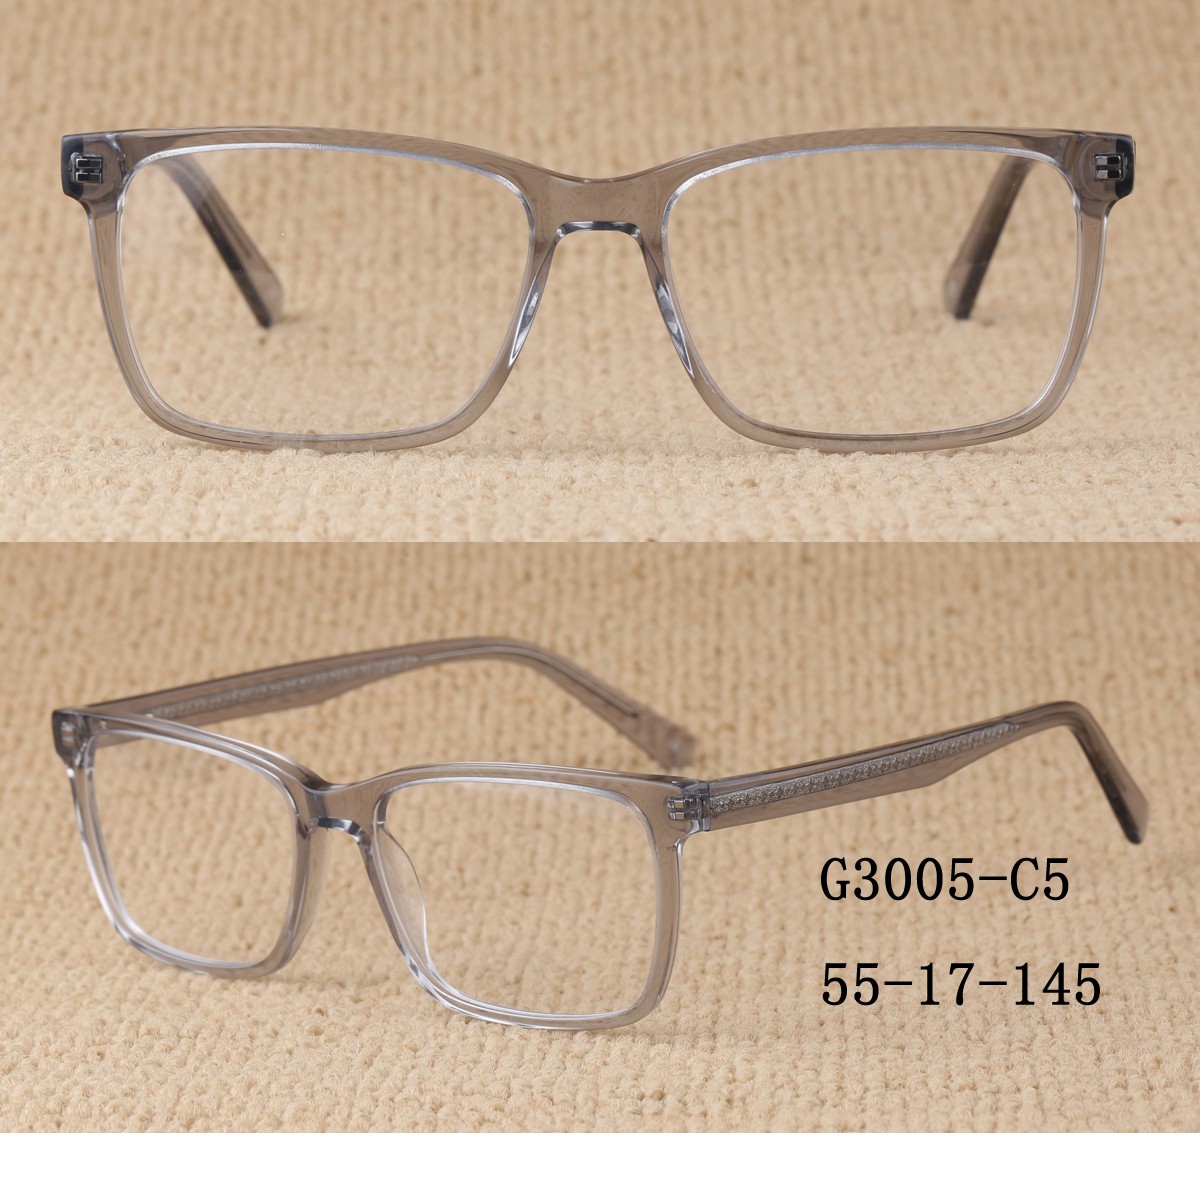 (RTS) GS-G3005 acetate glasses 2021 China's outstanding design square full rim size acetate fiber teen optical reading glasses